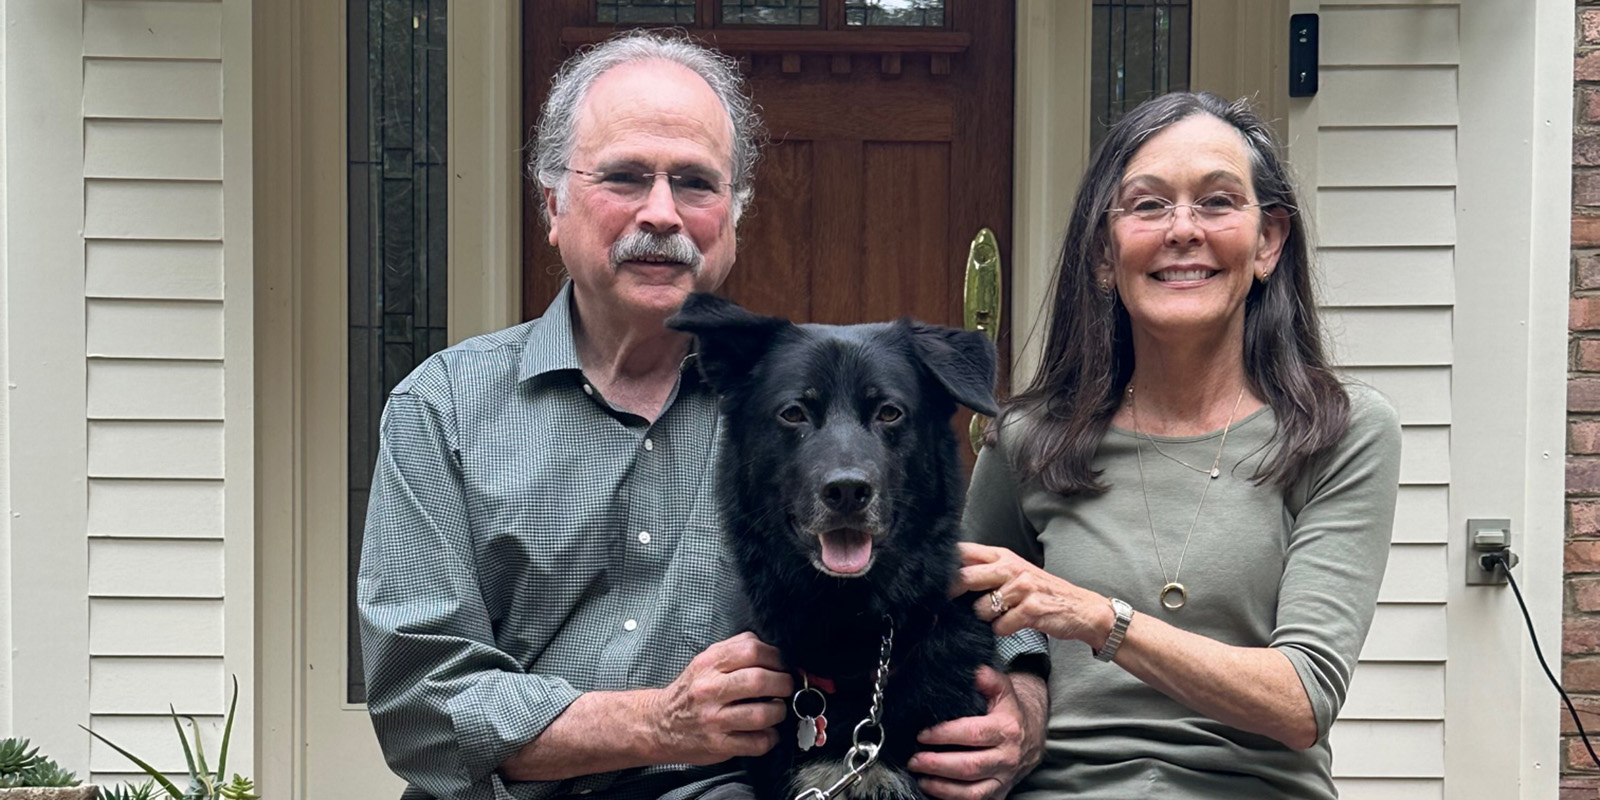 Charlie and Teresa Friedlander sit on a brick step with their black dog.